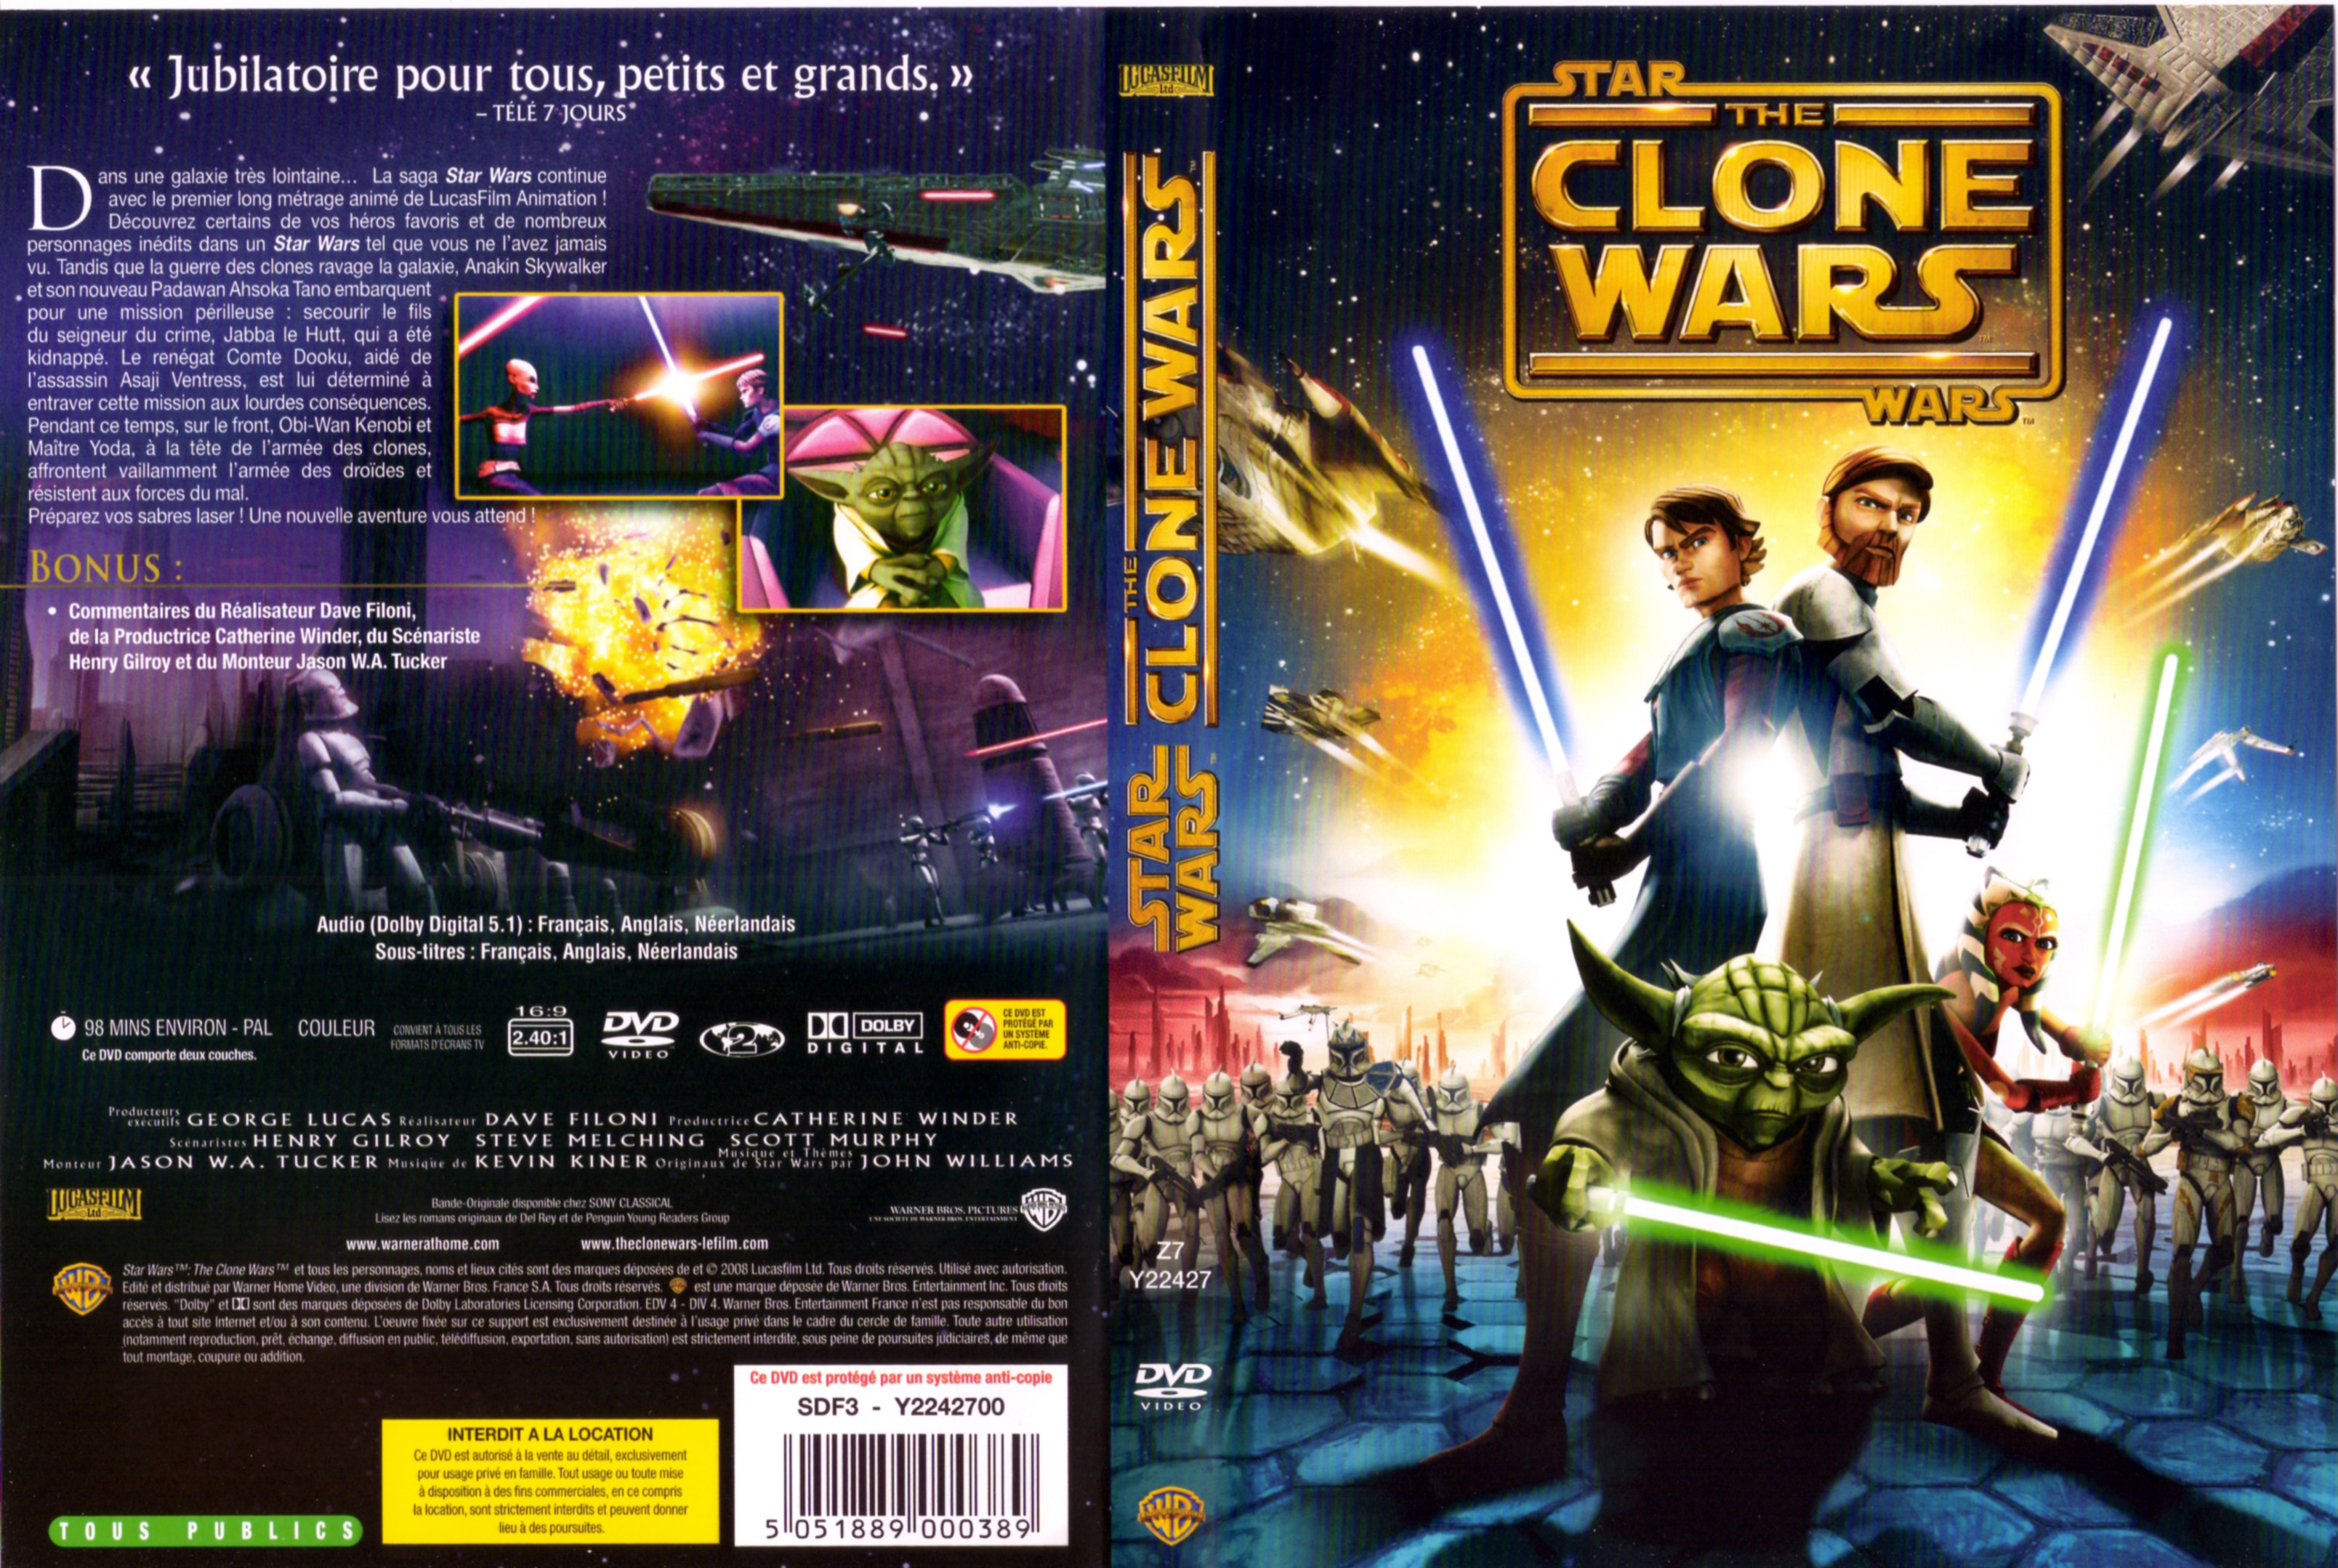 Jaquette DVD Star wars The clone wars